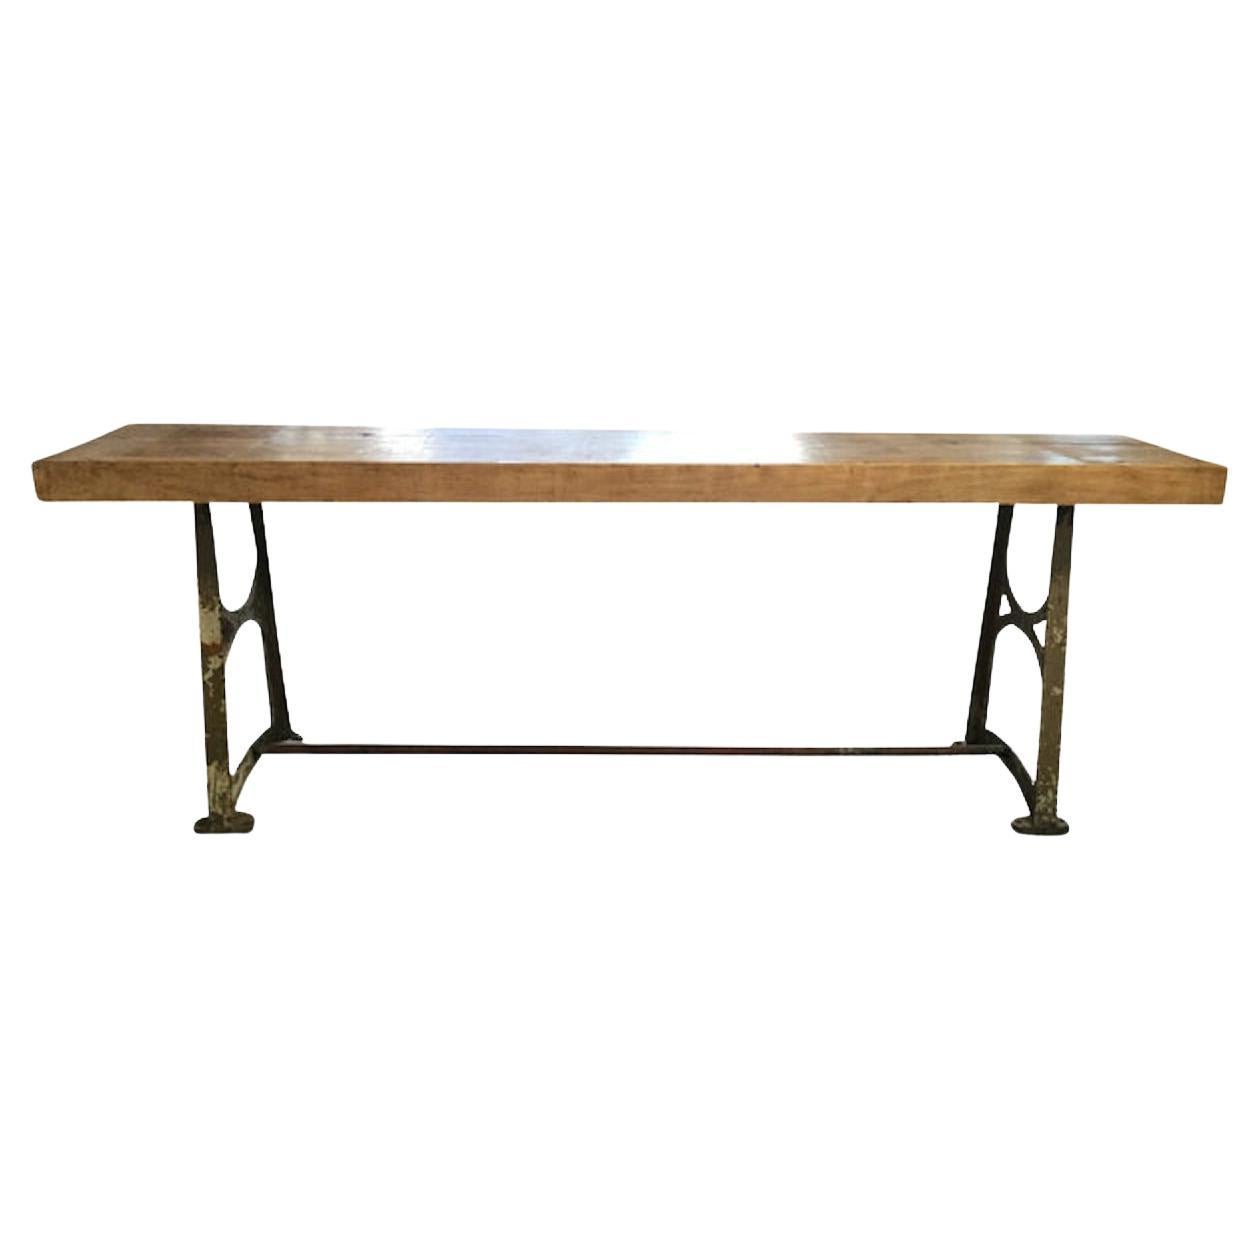 Vintage European Work Table with Metal Base